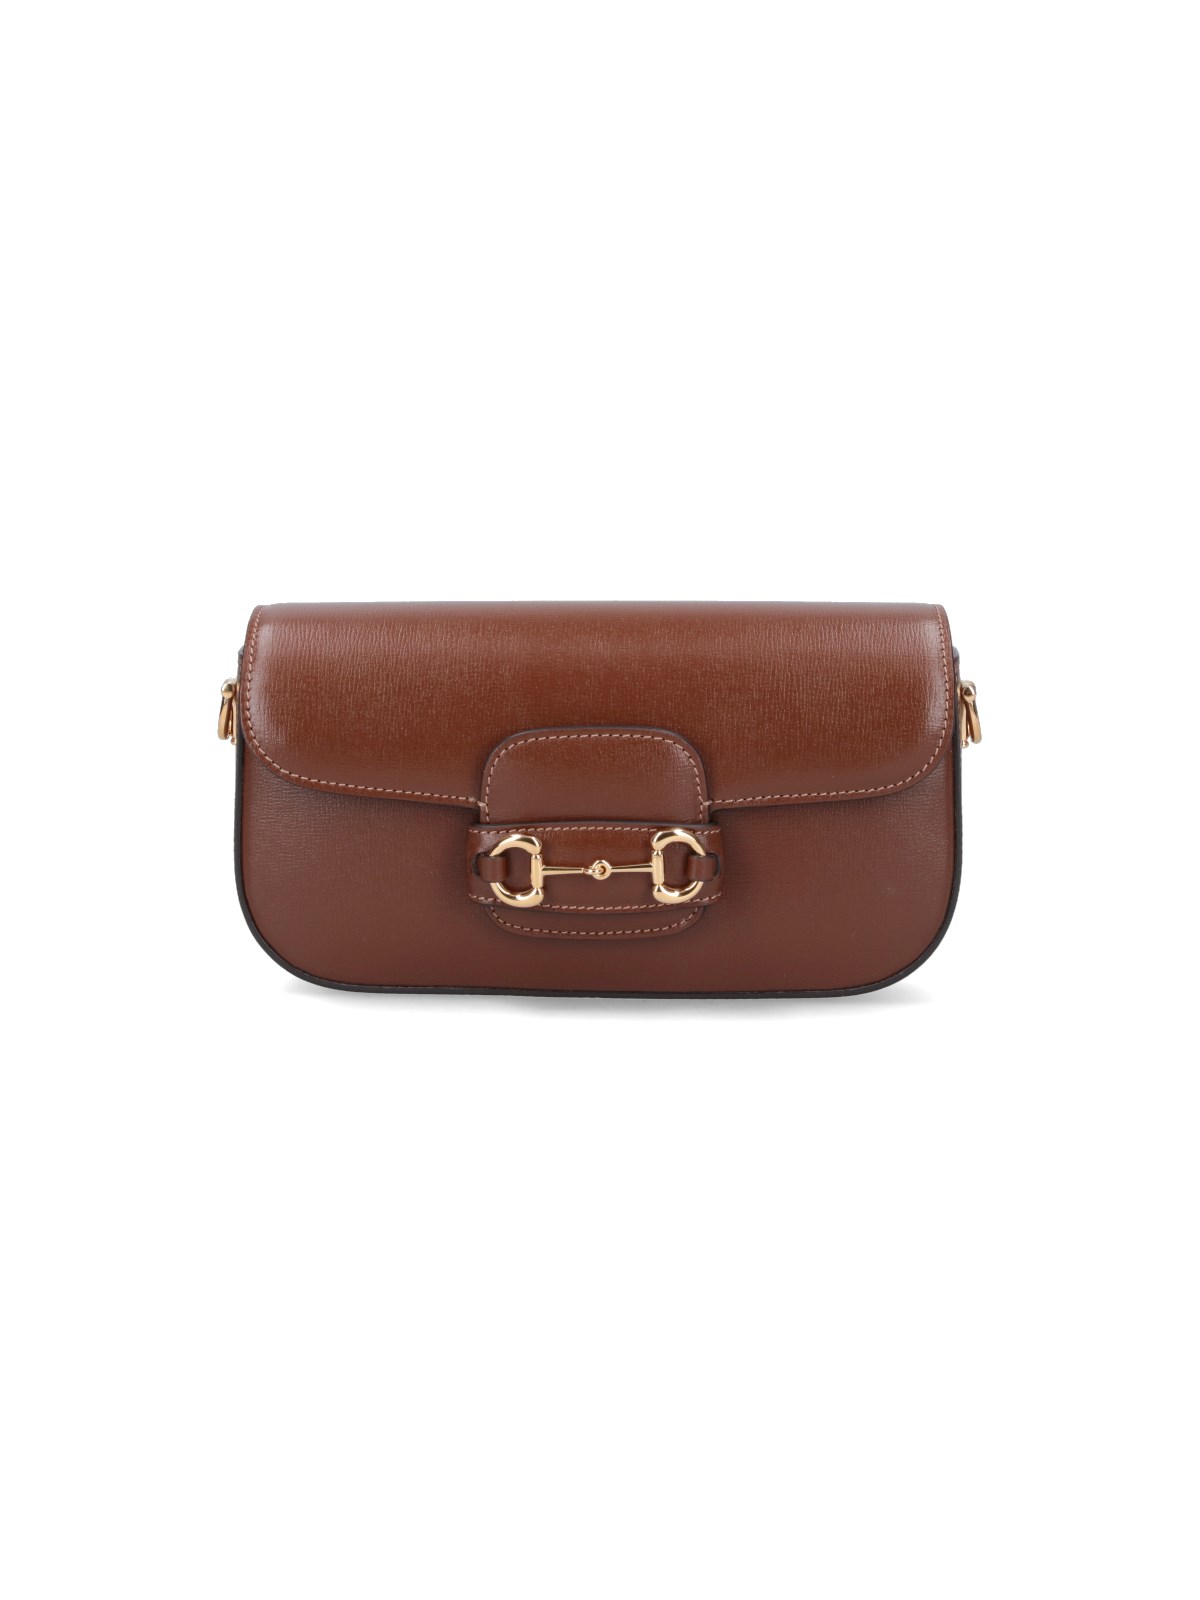 Gucci "horsebit 1955" Shoulder Bag In Brown